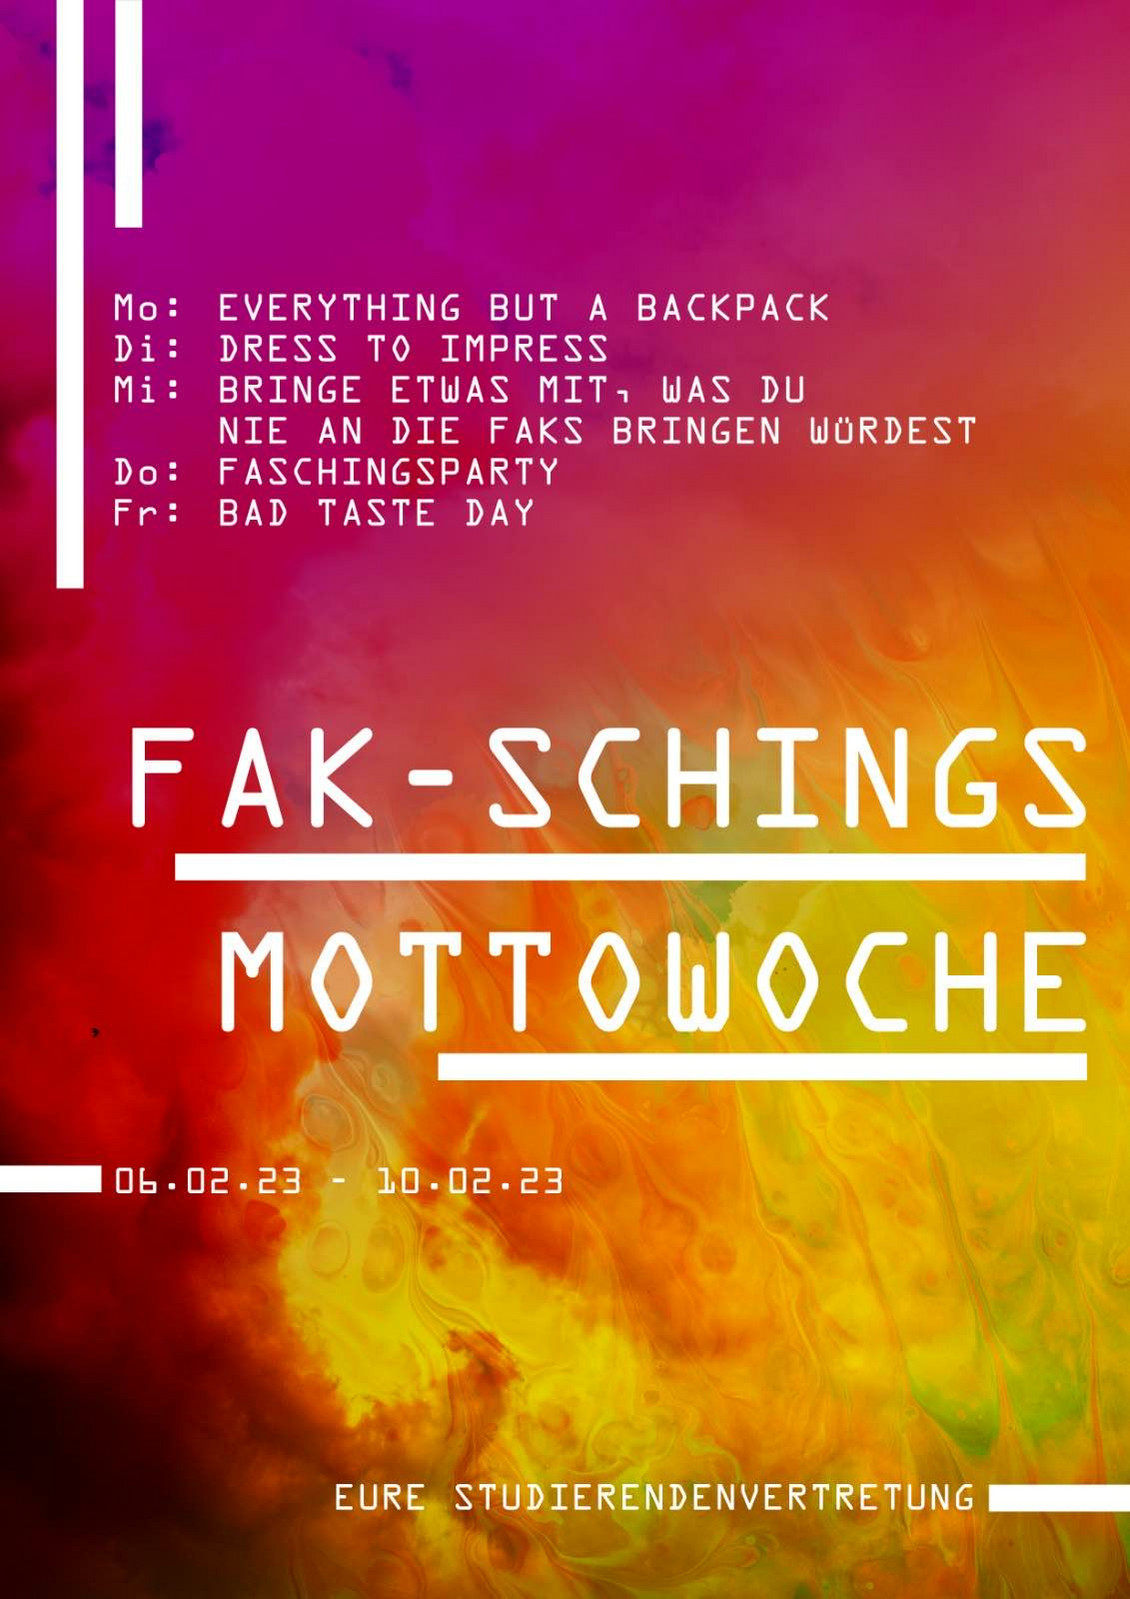 Fak-schings Mottowoche